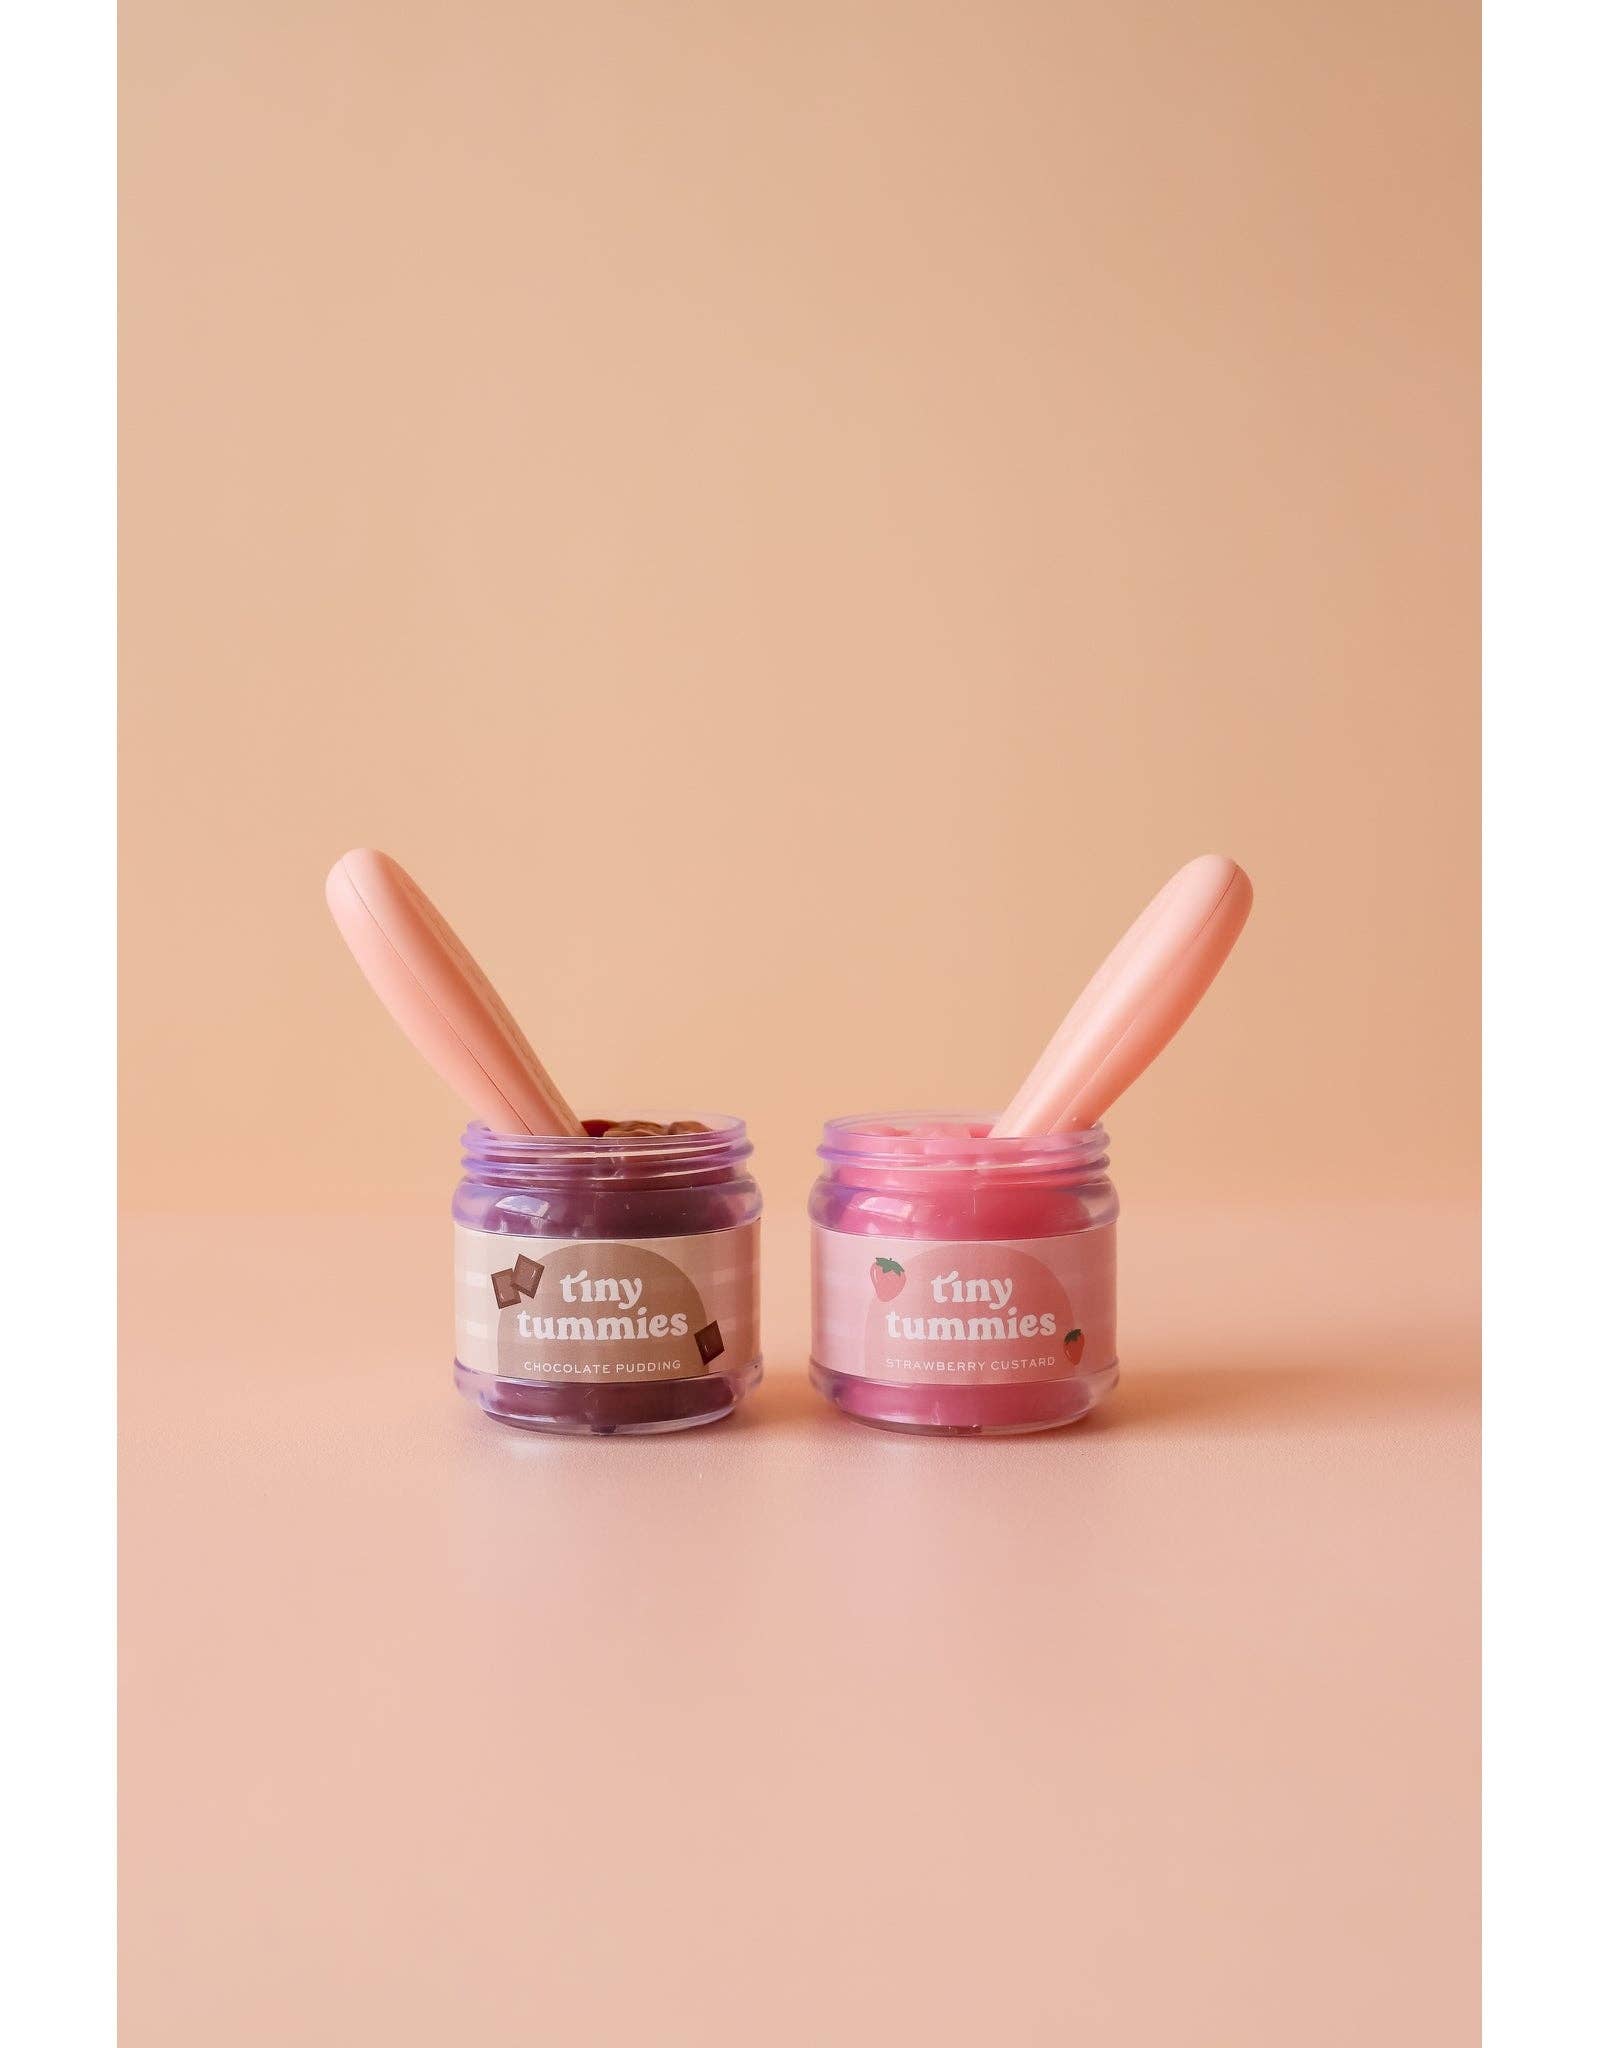 Tiny Tummies - Chocolate pudding - Jar and spoon - Tiny Harlow